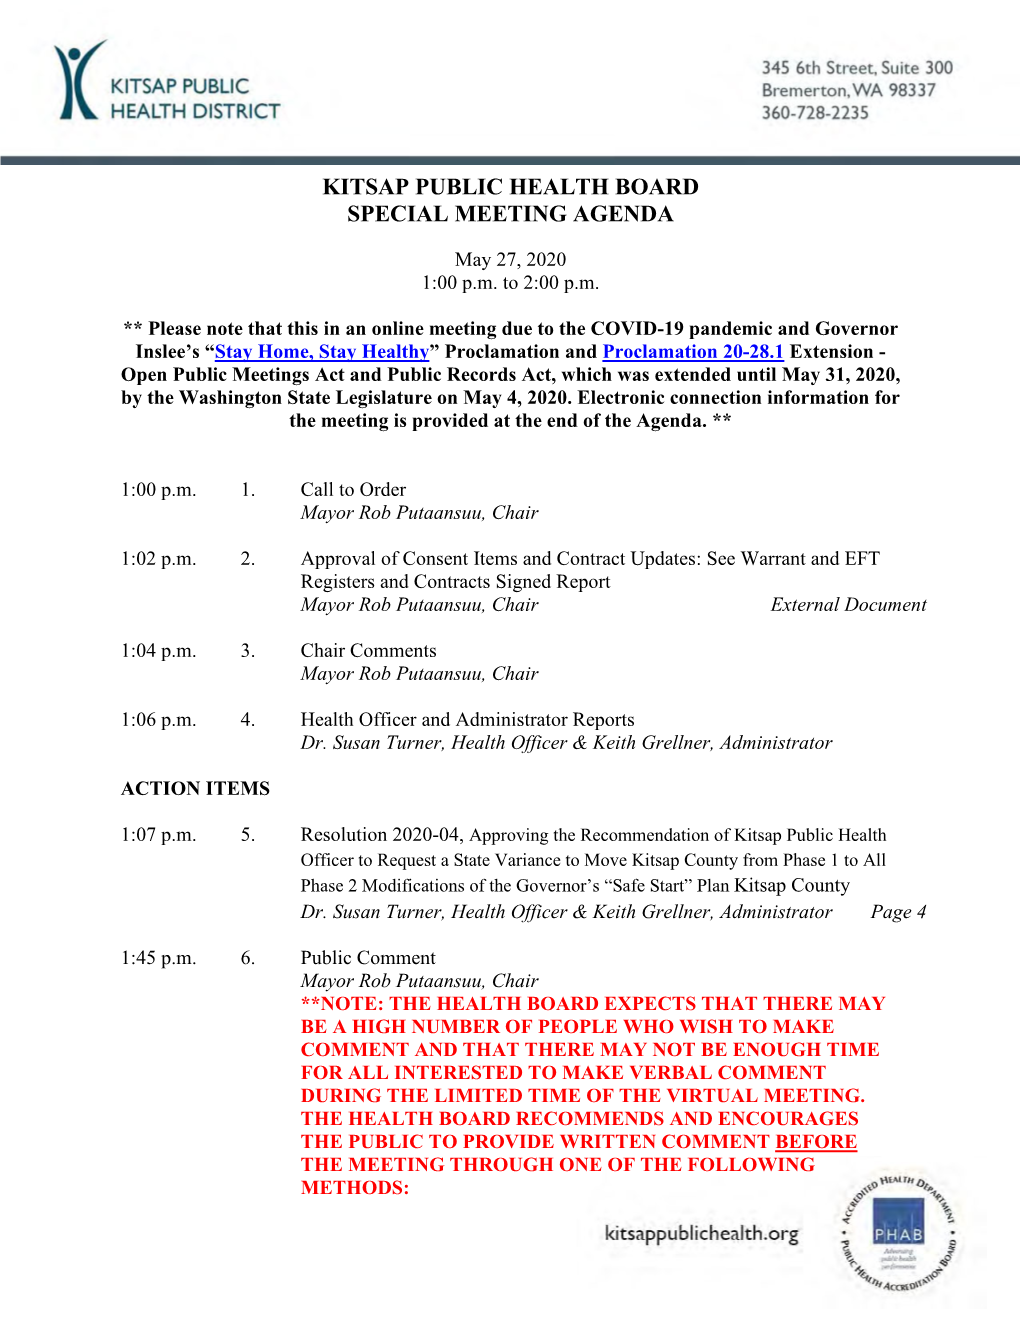 Kitsap Public Health Board Special Meeting Agenda